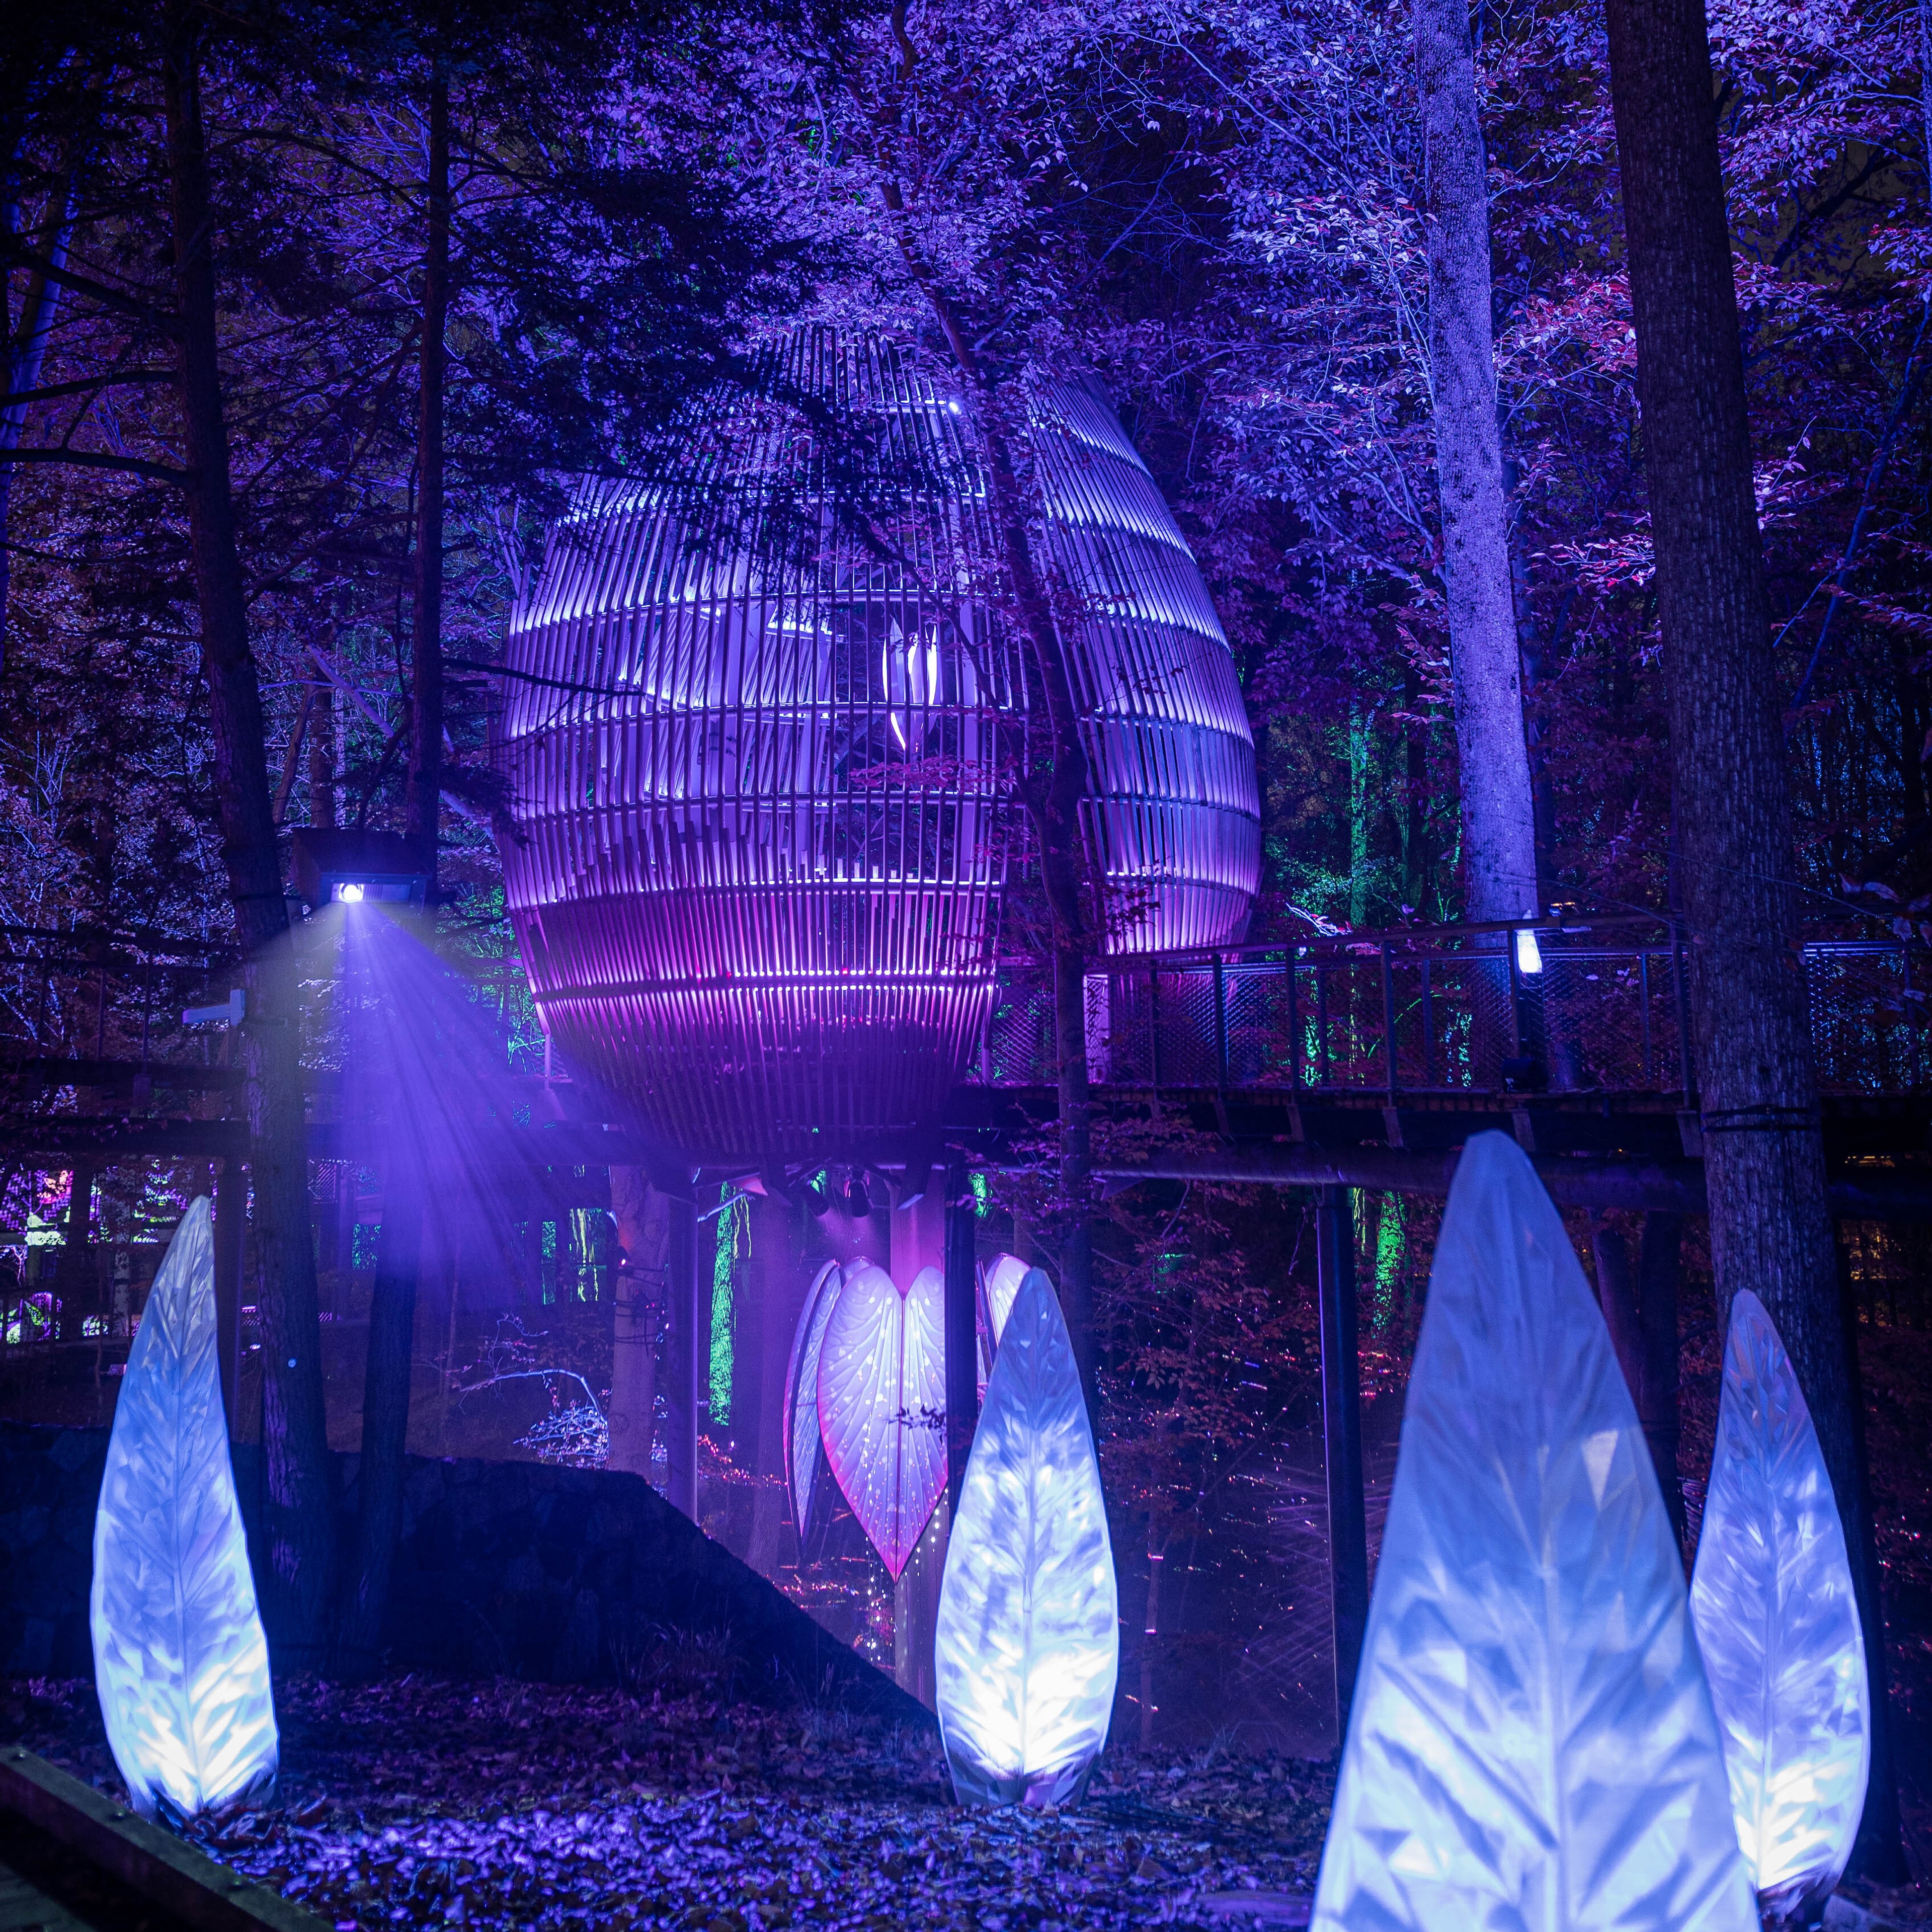 Glowing leaf sculptures and purple haze lighting